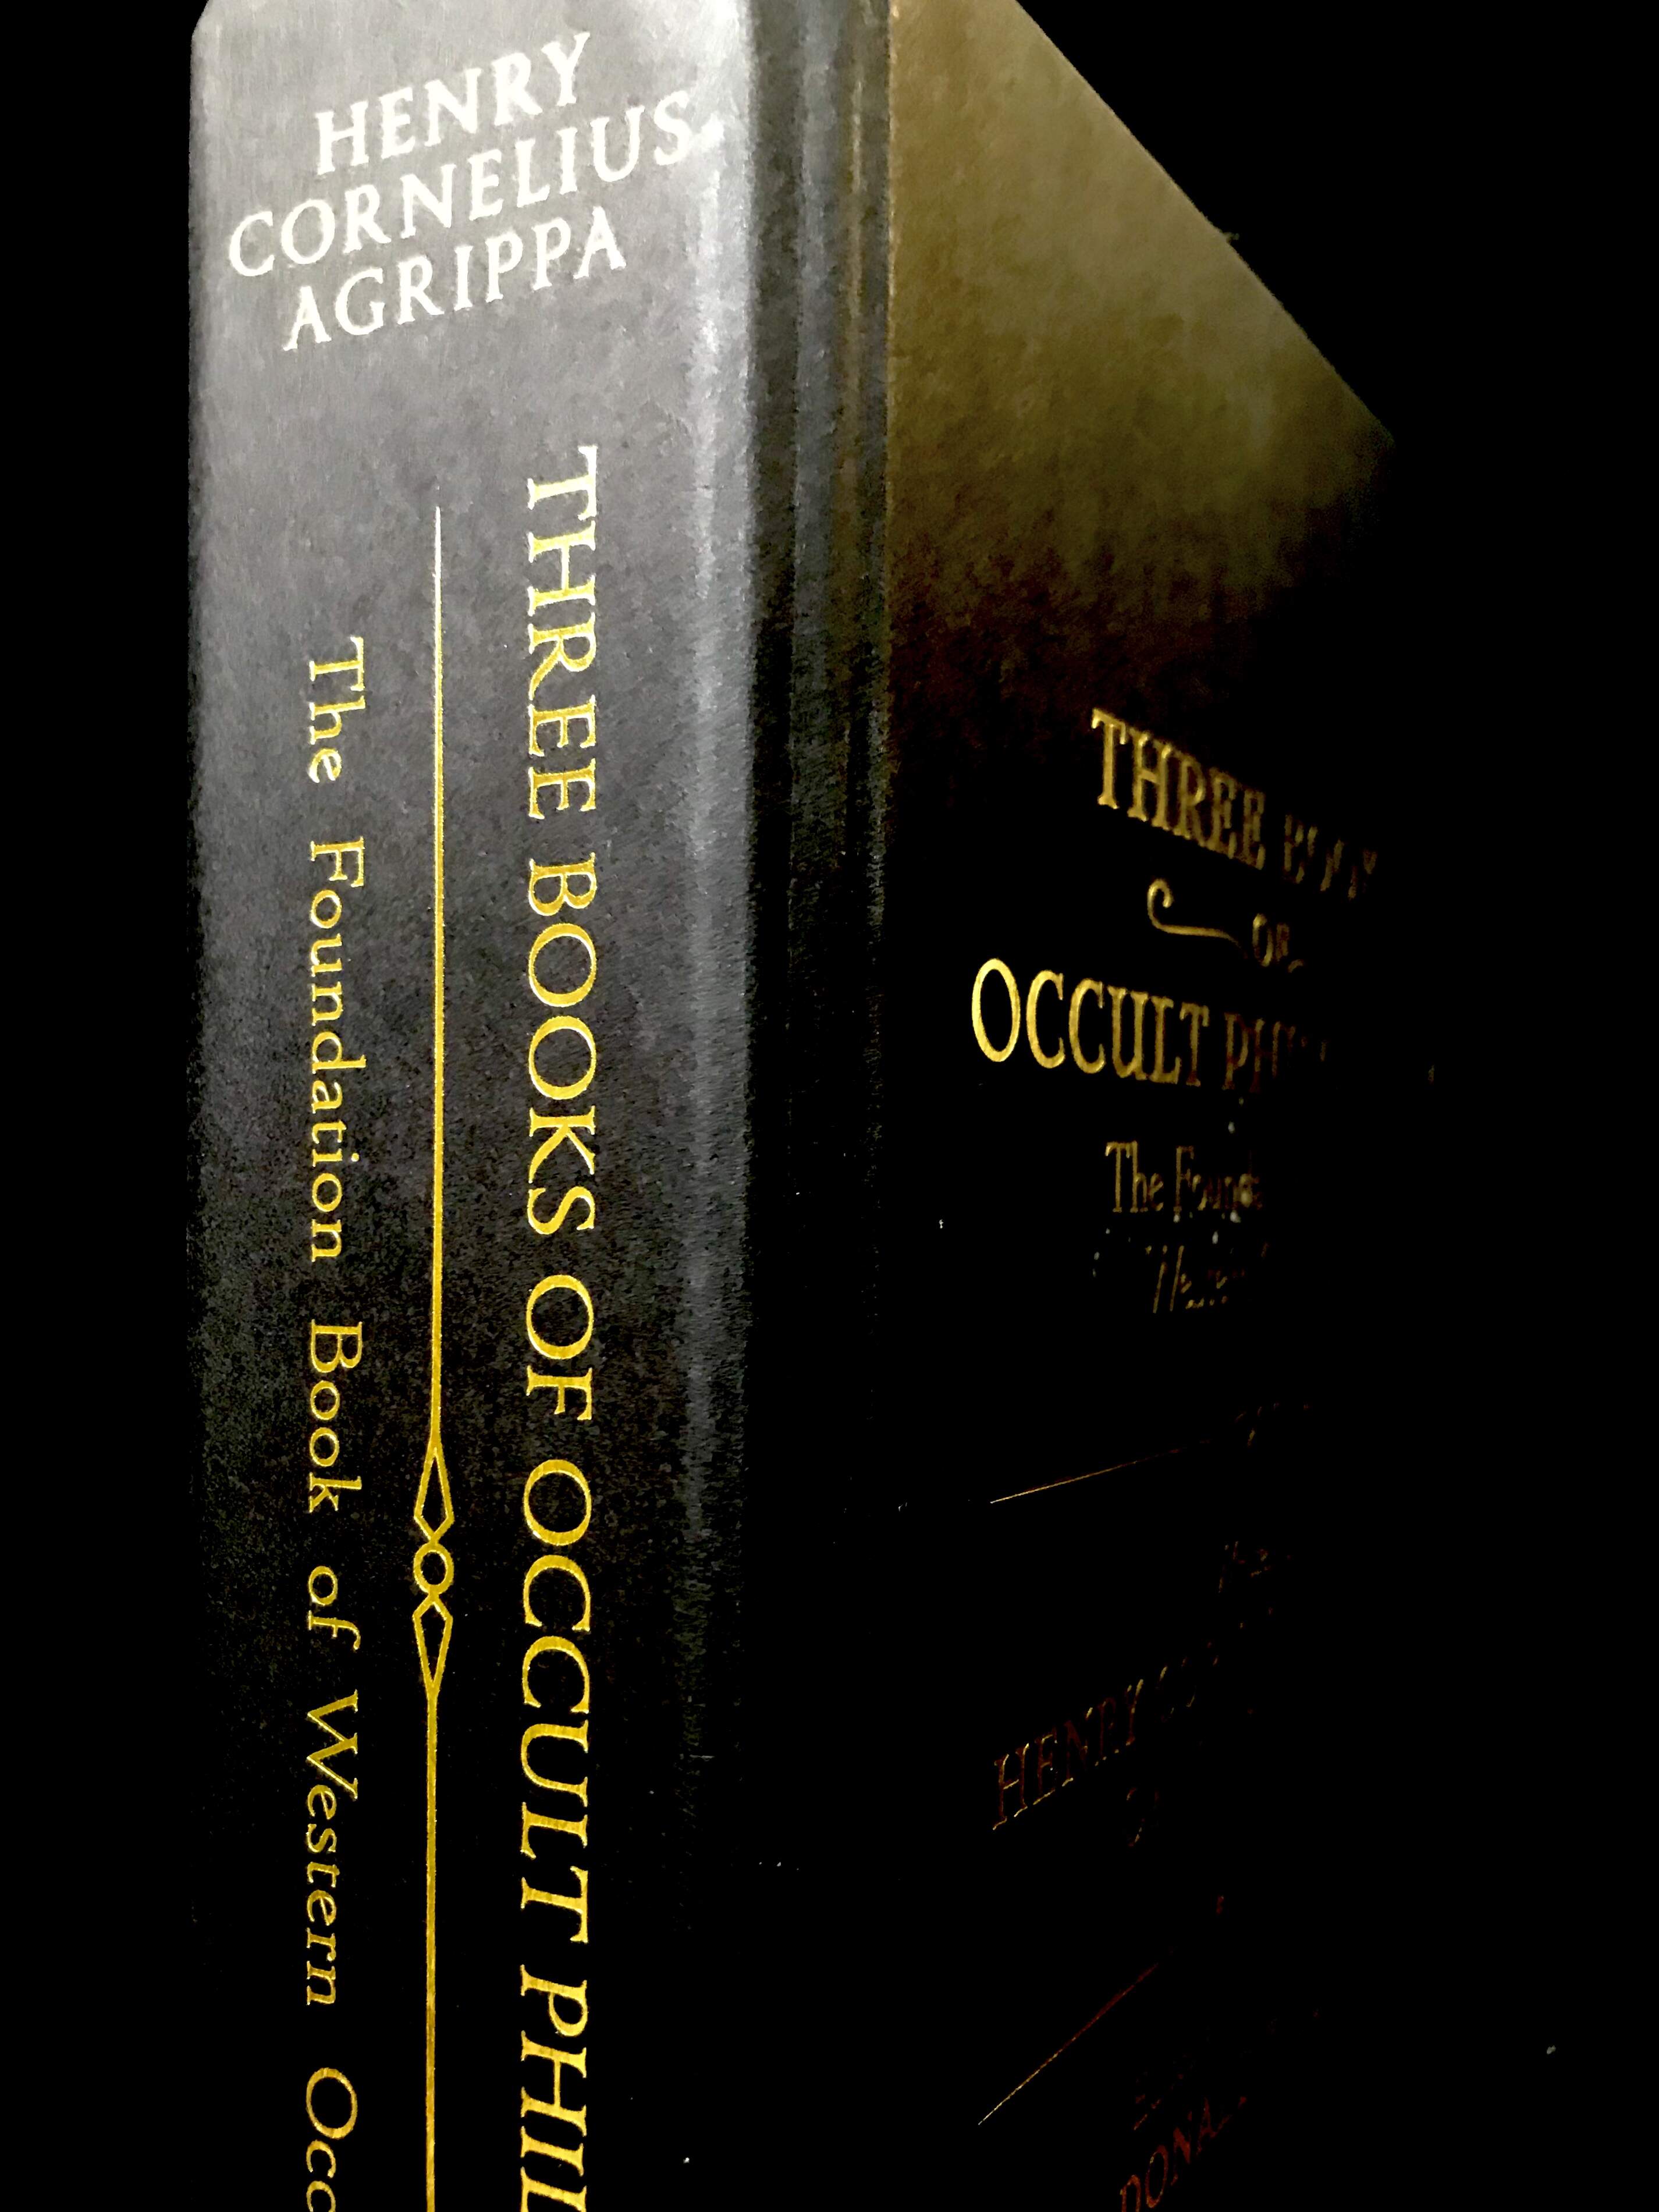 Three Books of Occult Philosophy by Henry Cornelius Agrippa